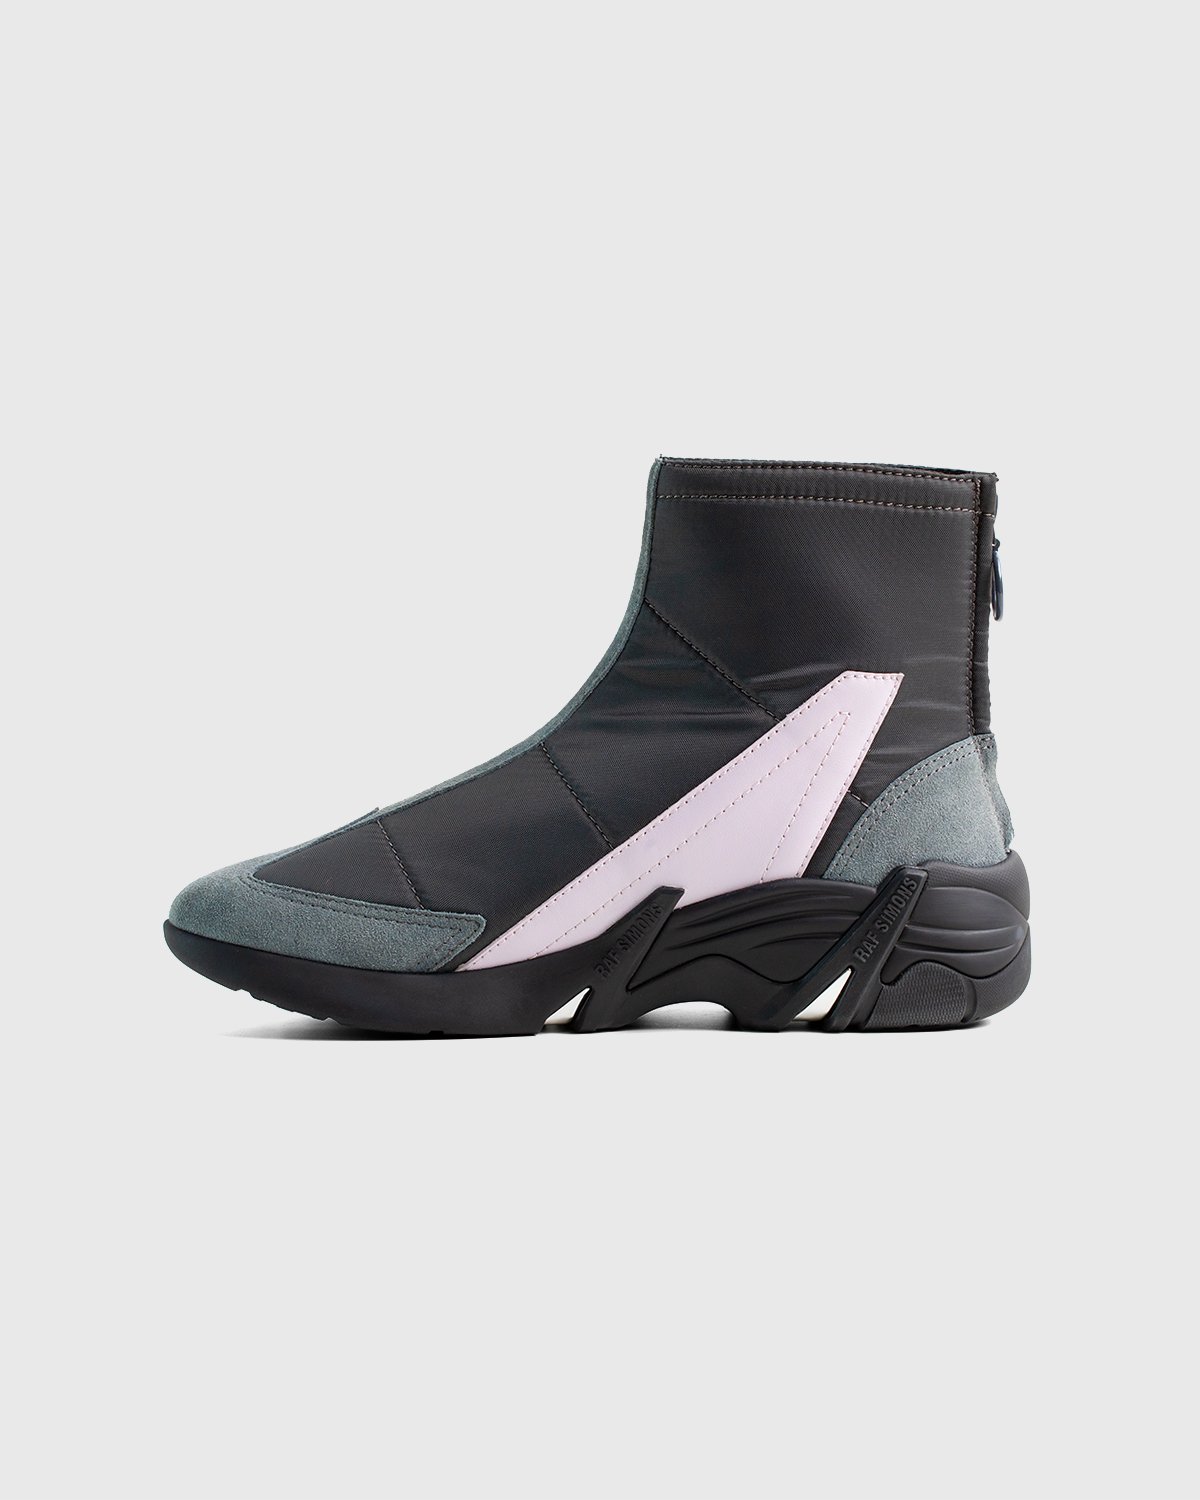 Raf Simons - Cylon 22 Antracite - Footwear - Grey - Image 6